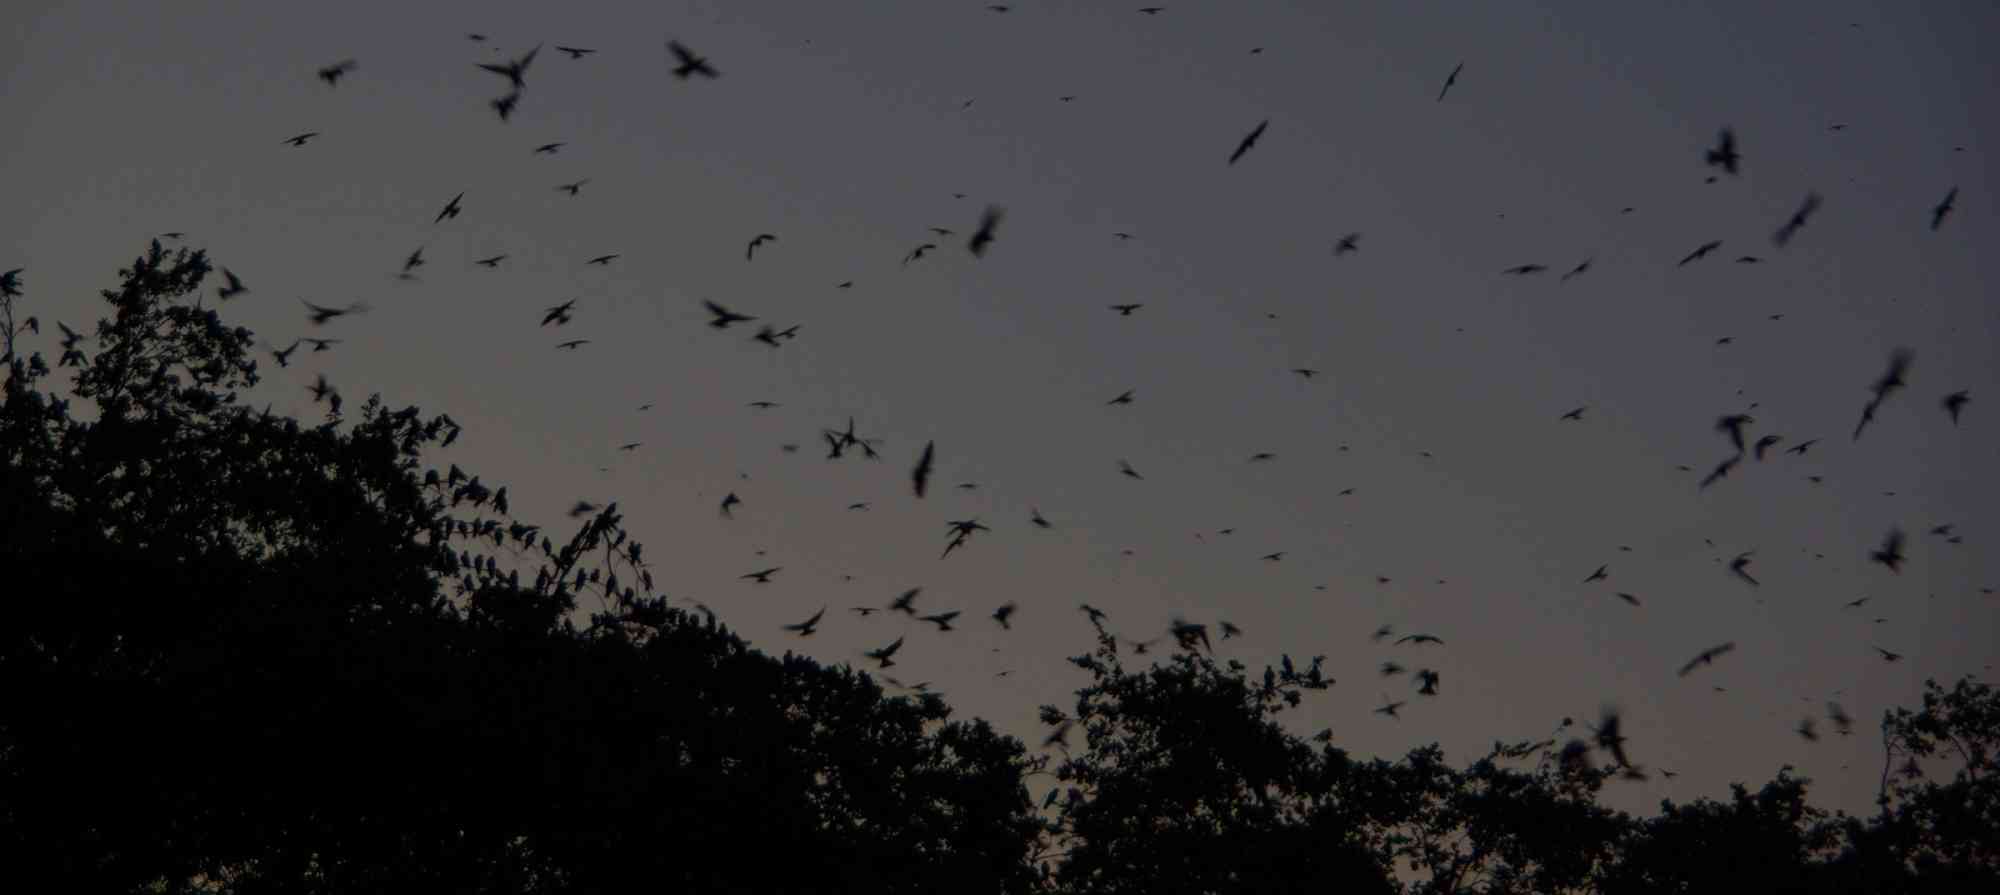 Birds flying at night in Texas